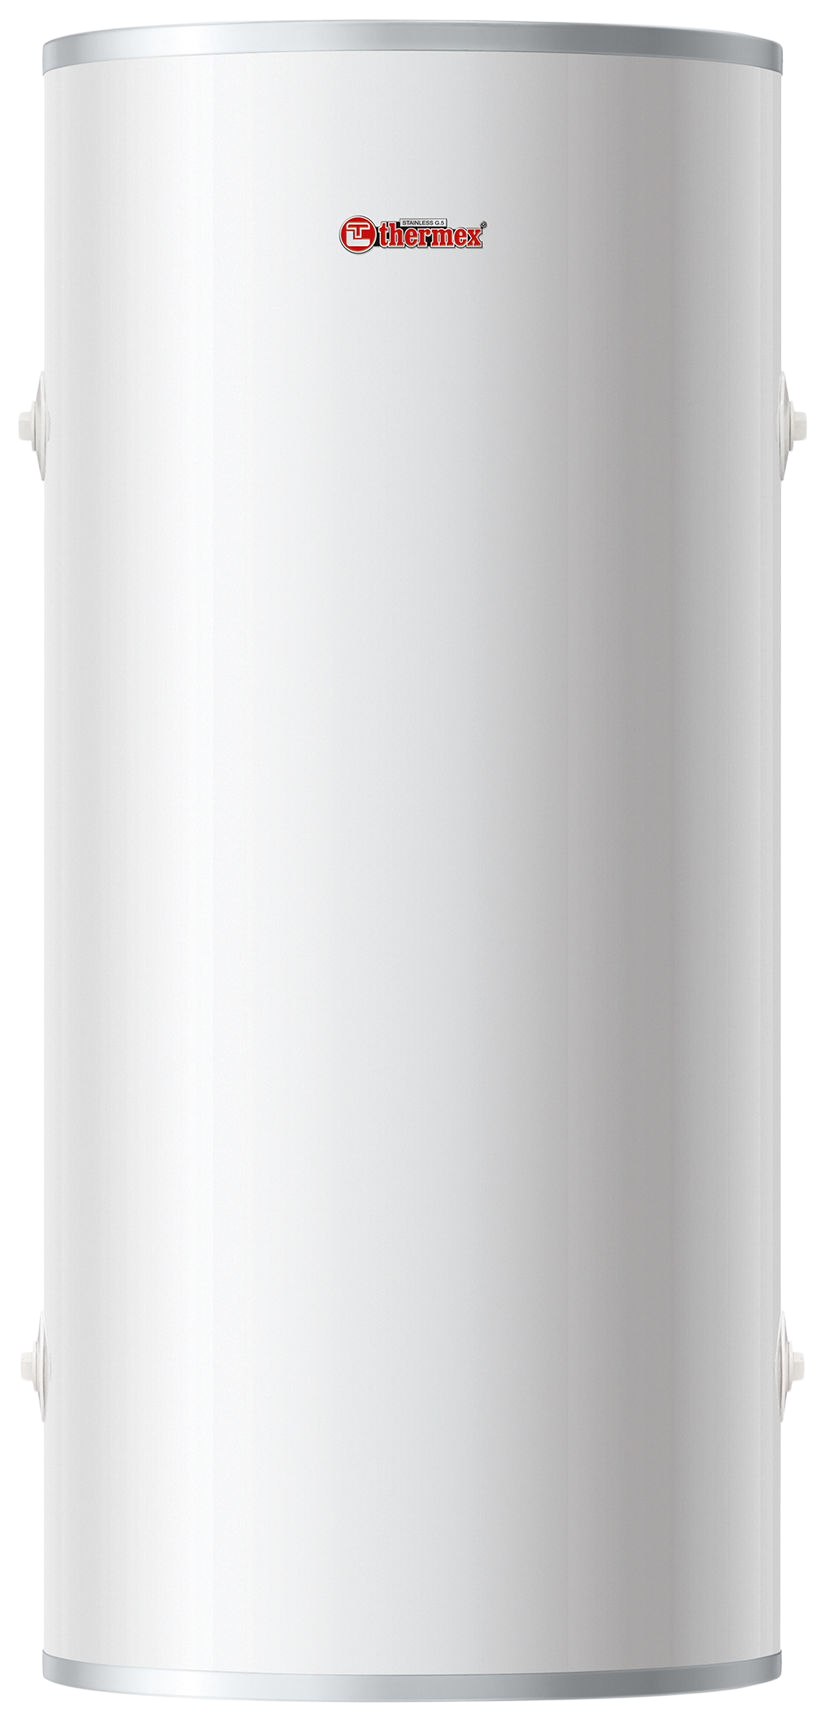 Водонагреватель накопительный THERMEX IR 200 V white водонагреватель накопительный элвин эвбо калуга 15 л white